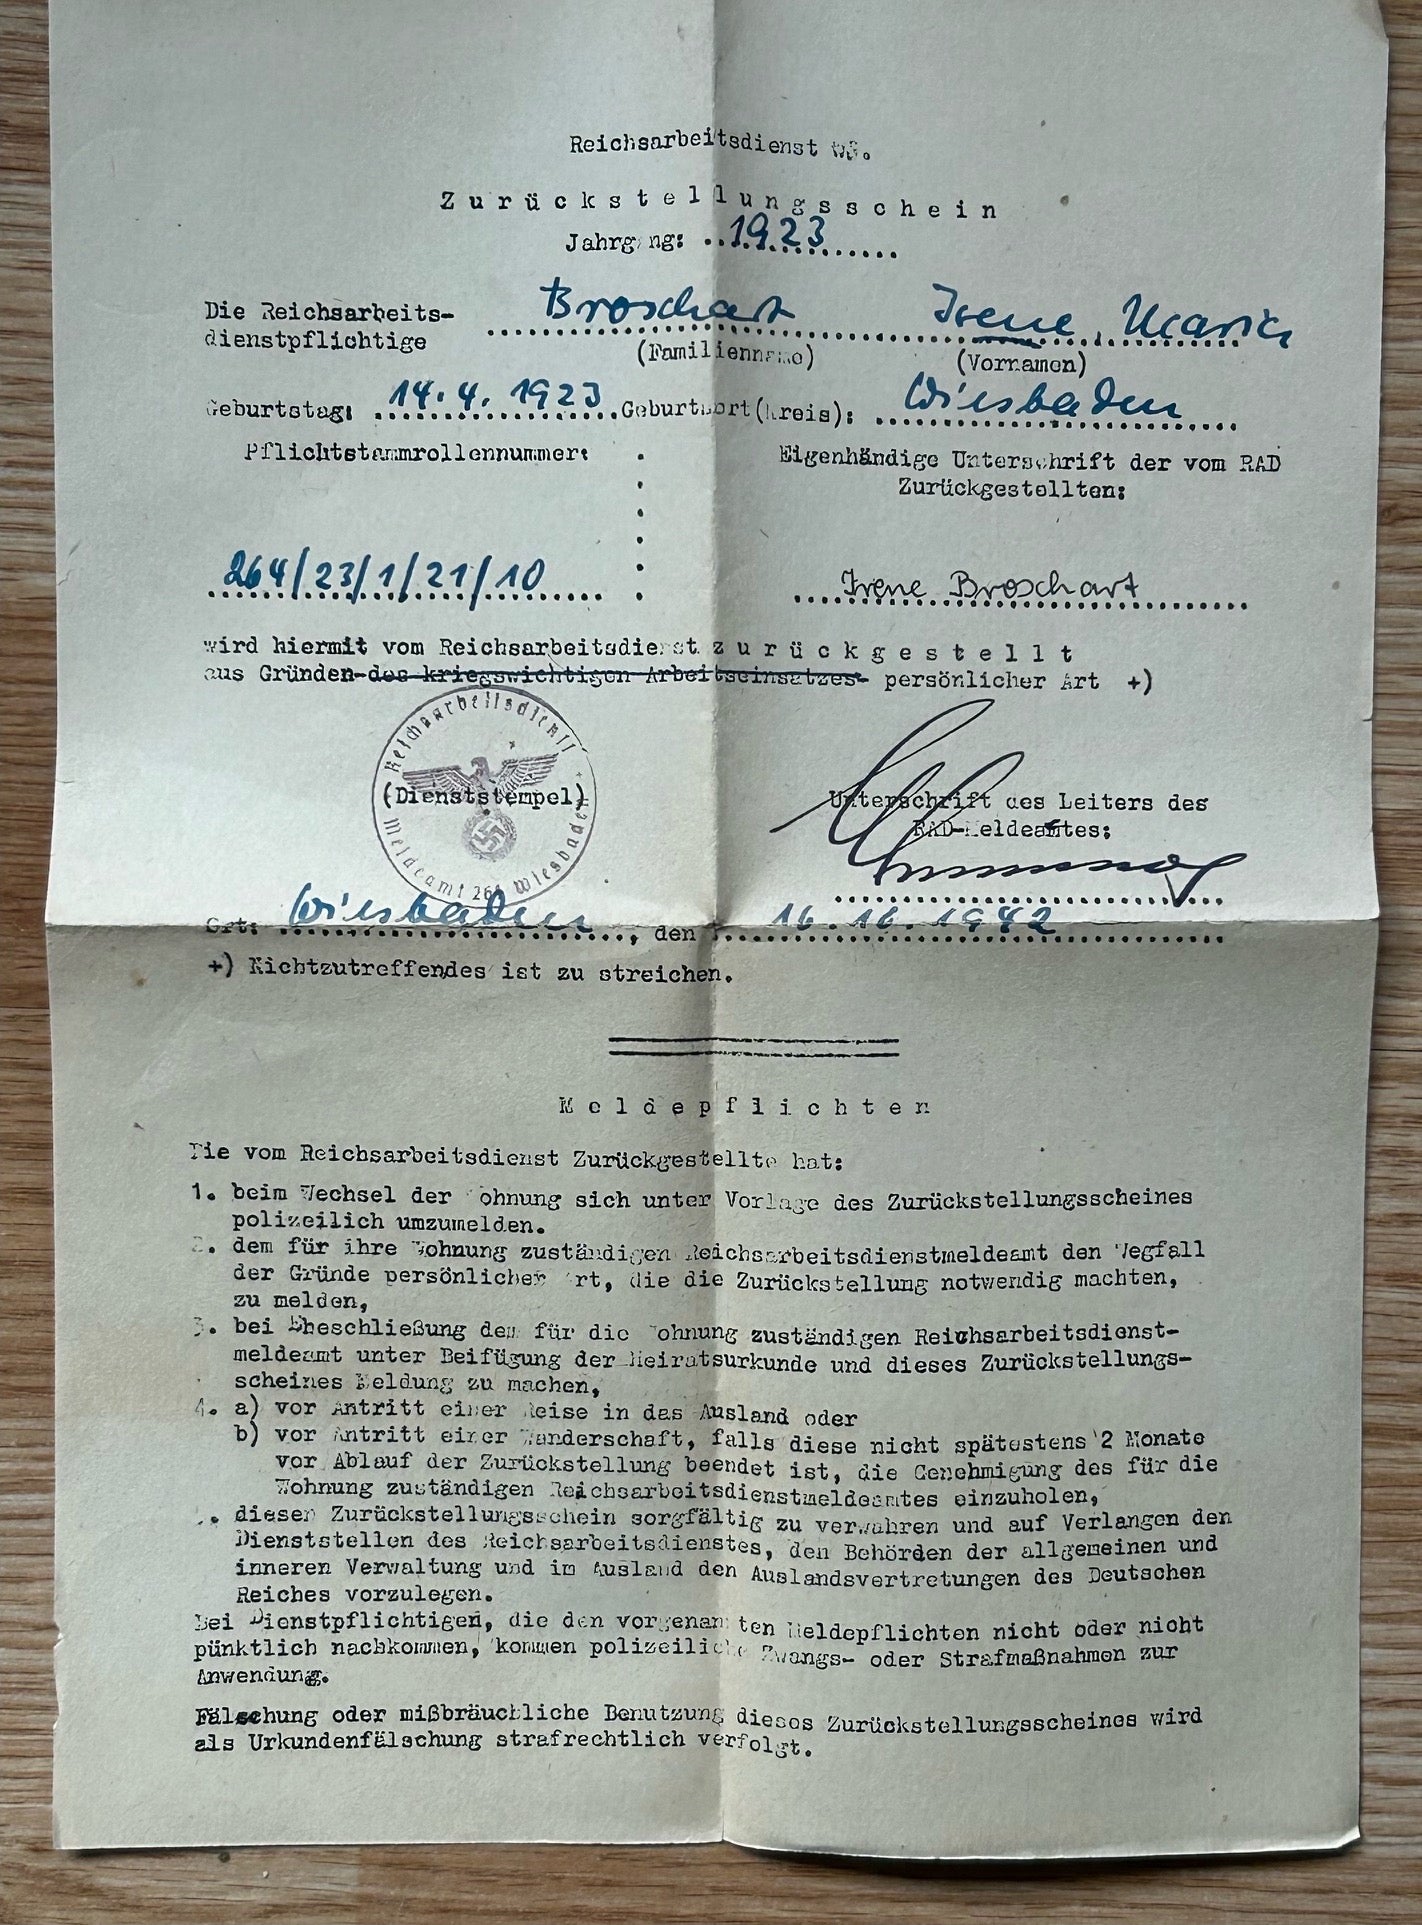 RAD registration card - female member, Wiesbaden 1941